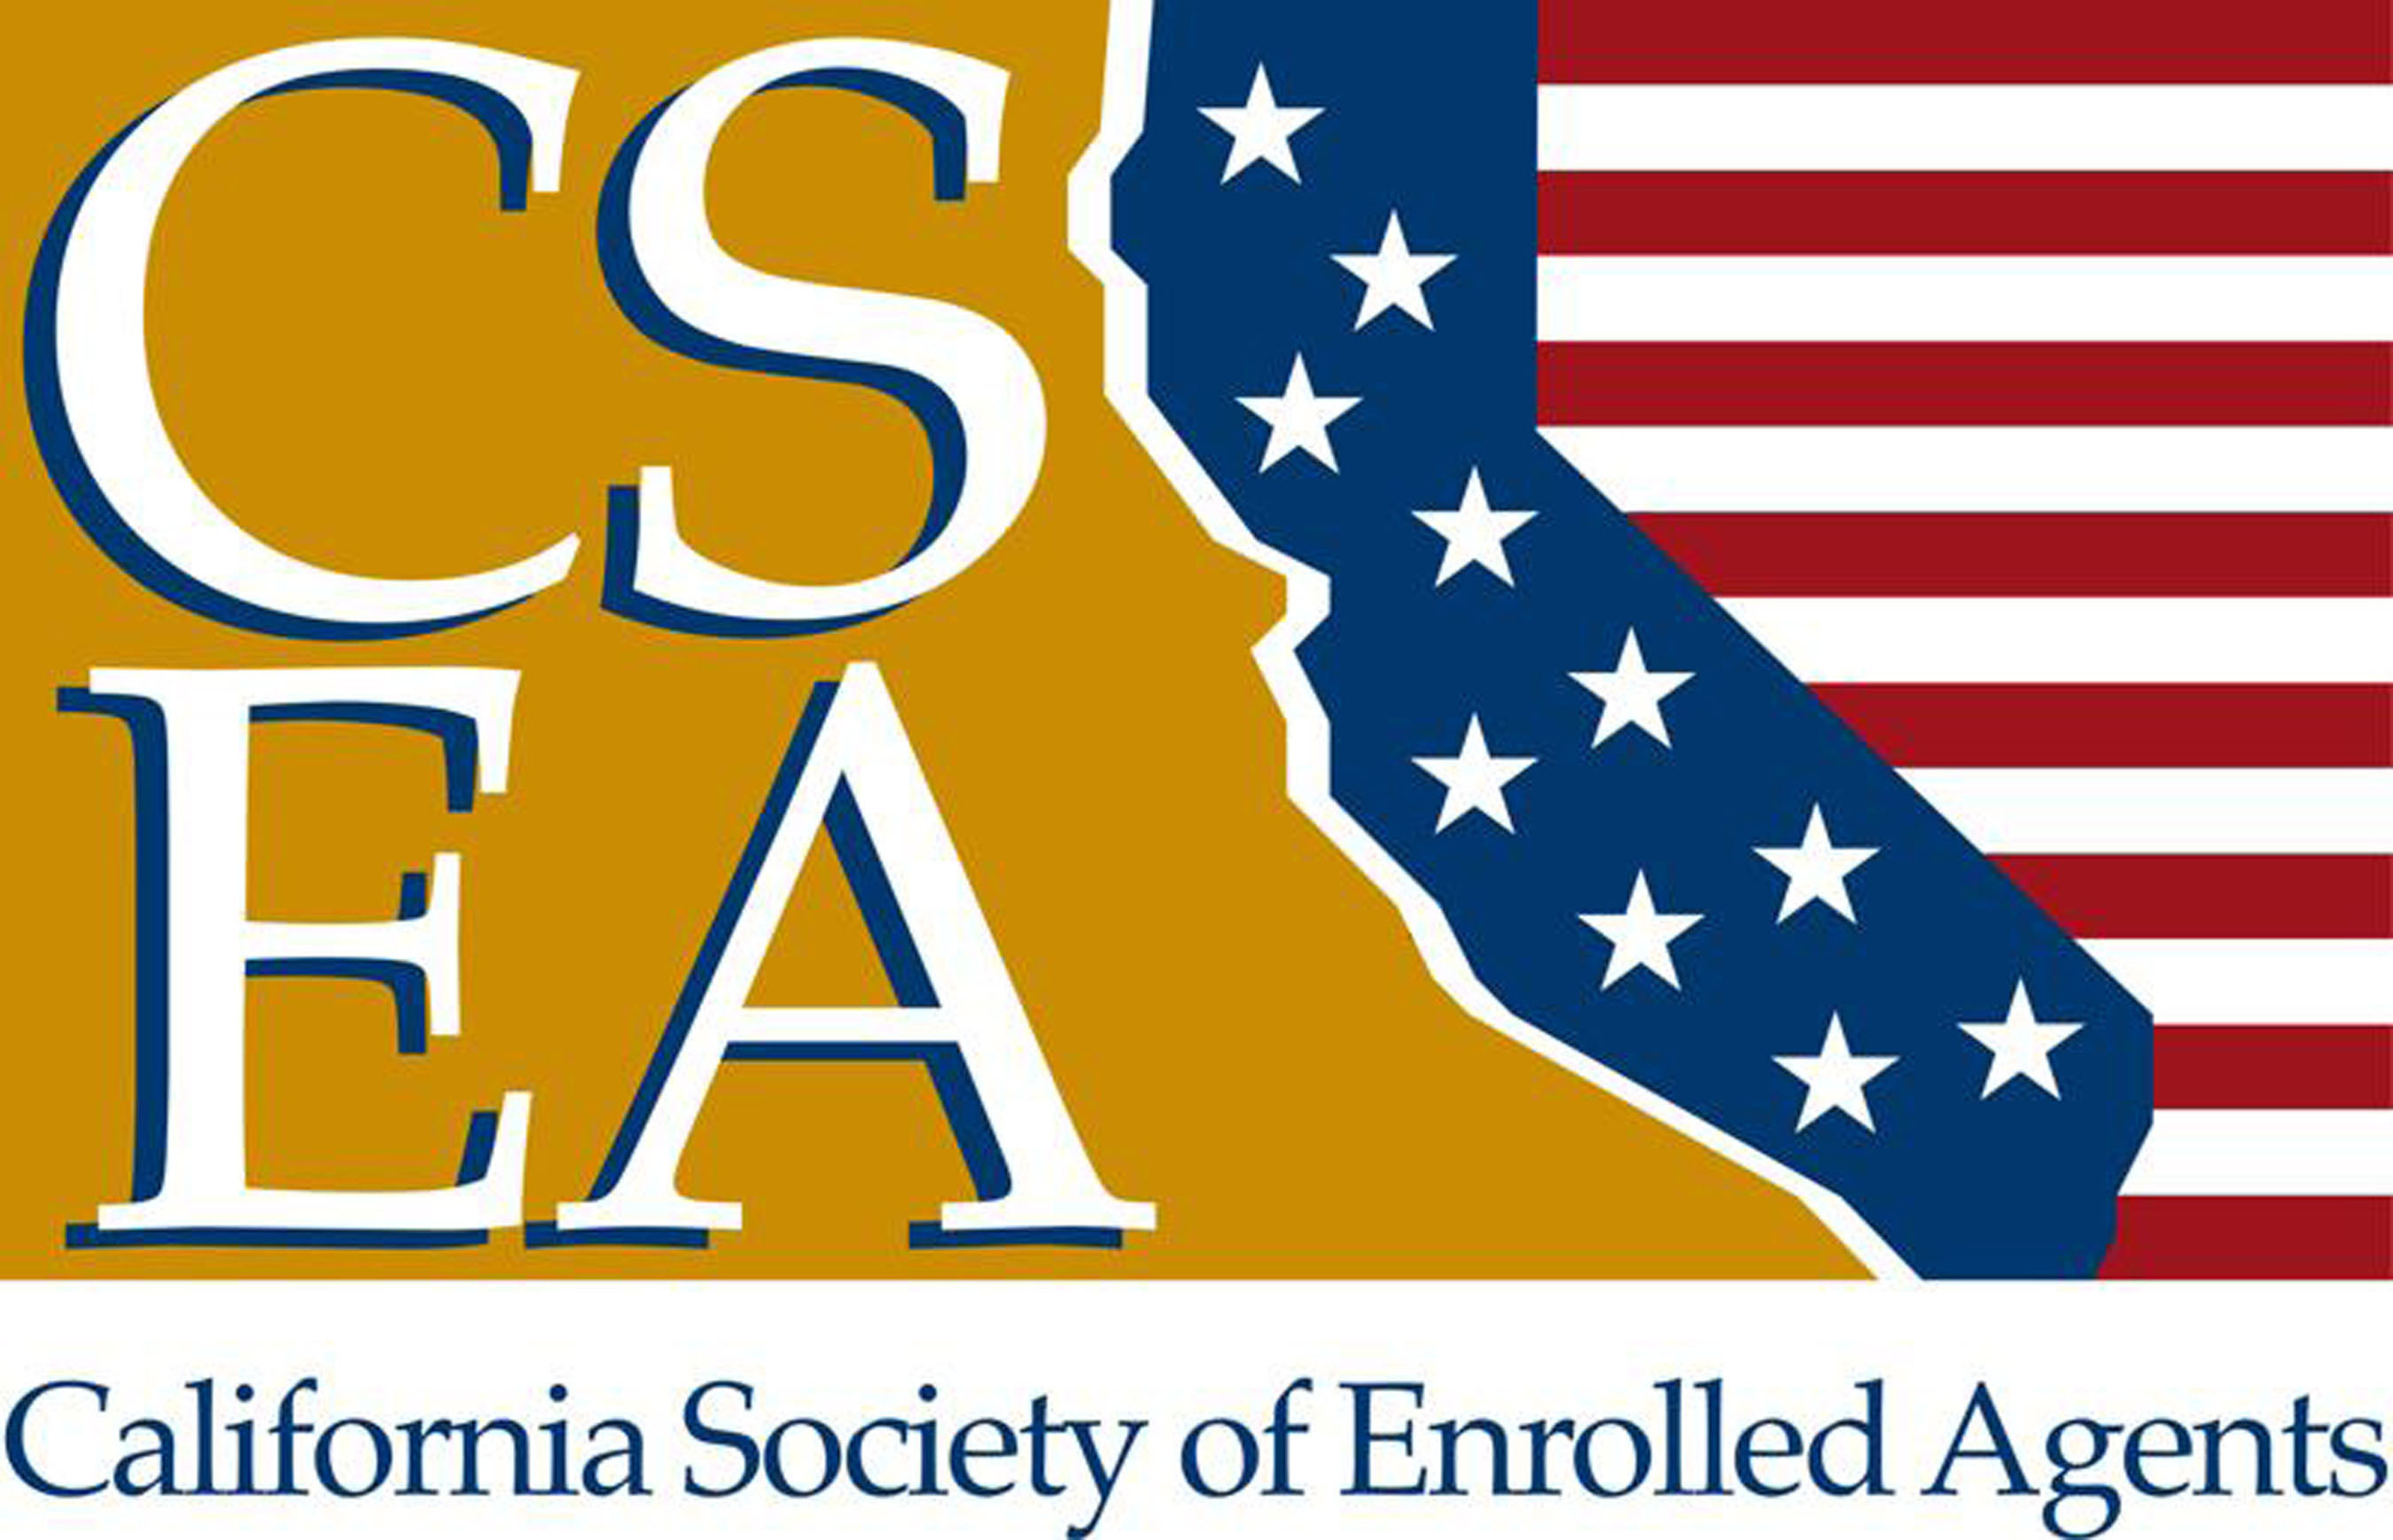 California Society of Enrolled Agents Logo.